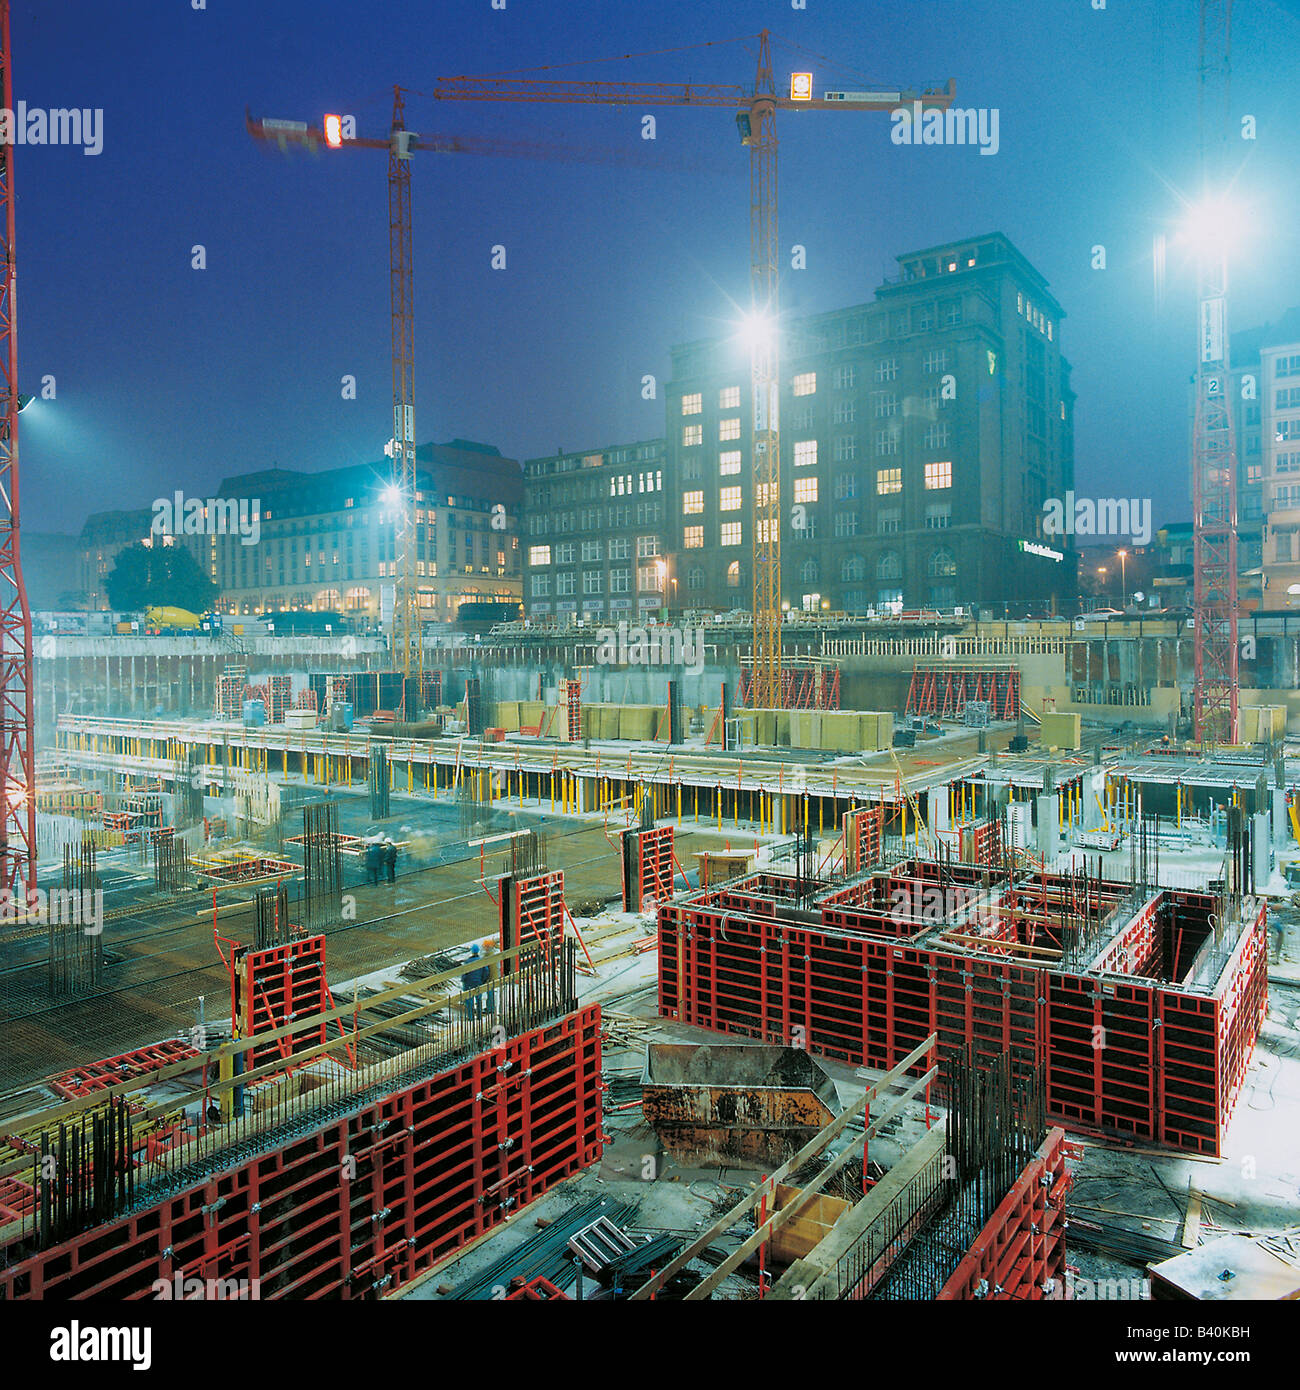 Illuminated construction site at night Stock Photo